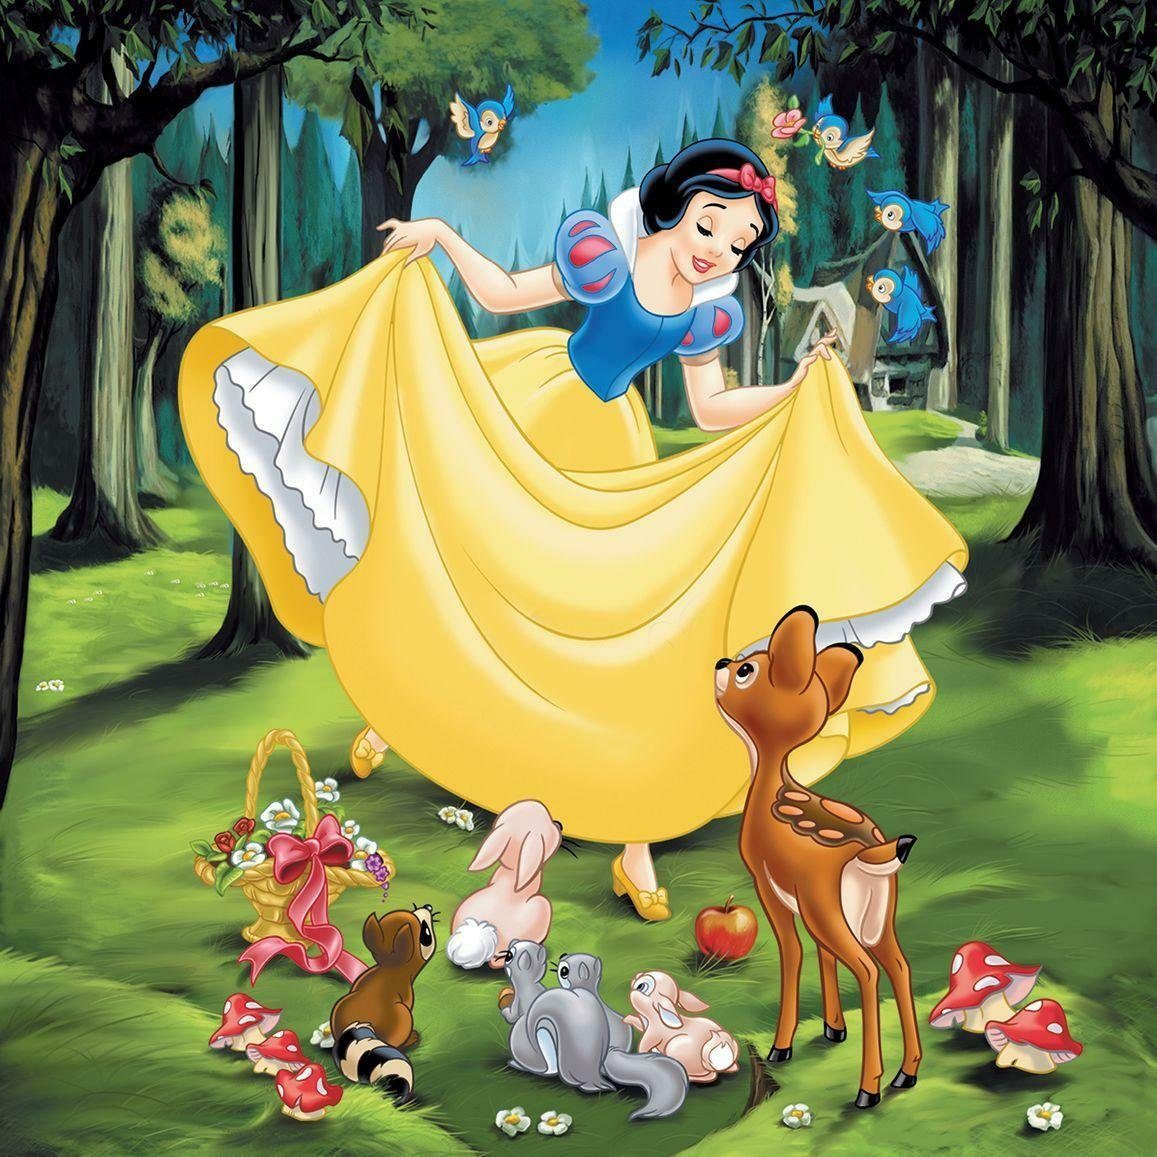 Disney Arielle. Princess: Aschenputtel, Puzzle x..., Schneewittchen, 49 Puzzleteile Ravensburger Puzzle 3